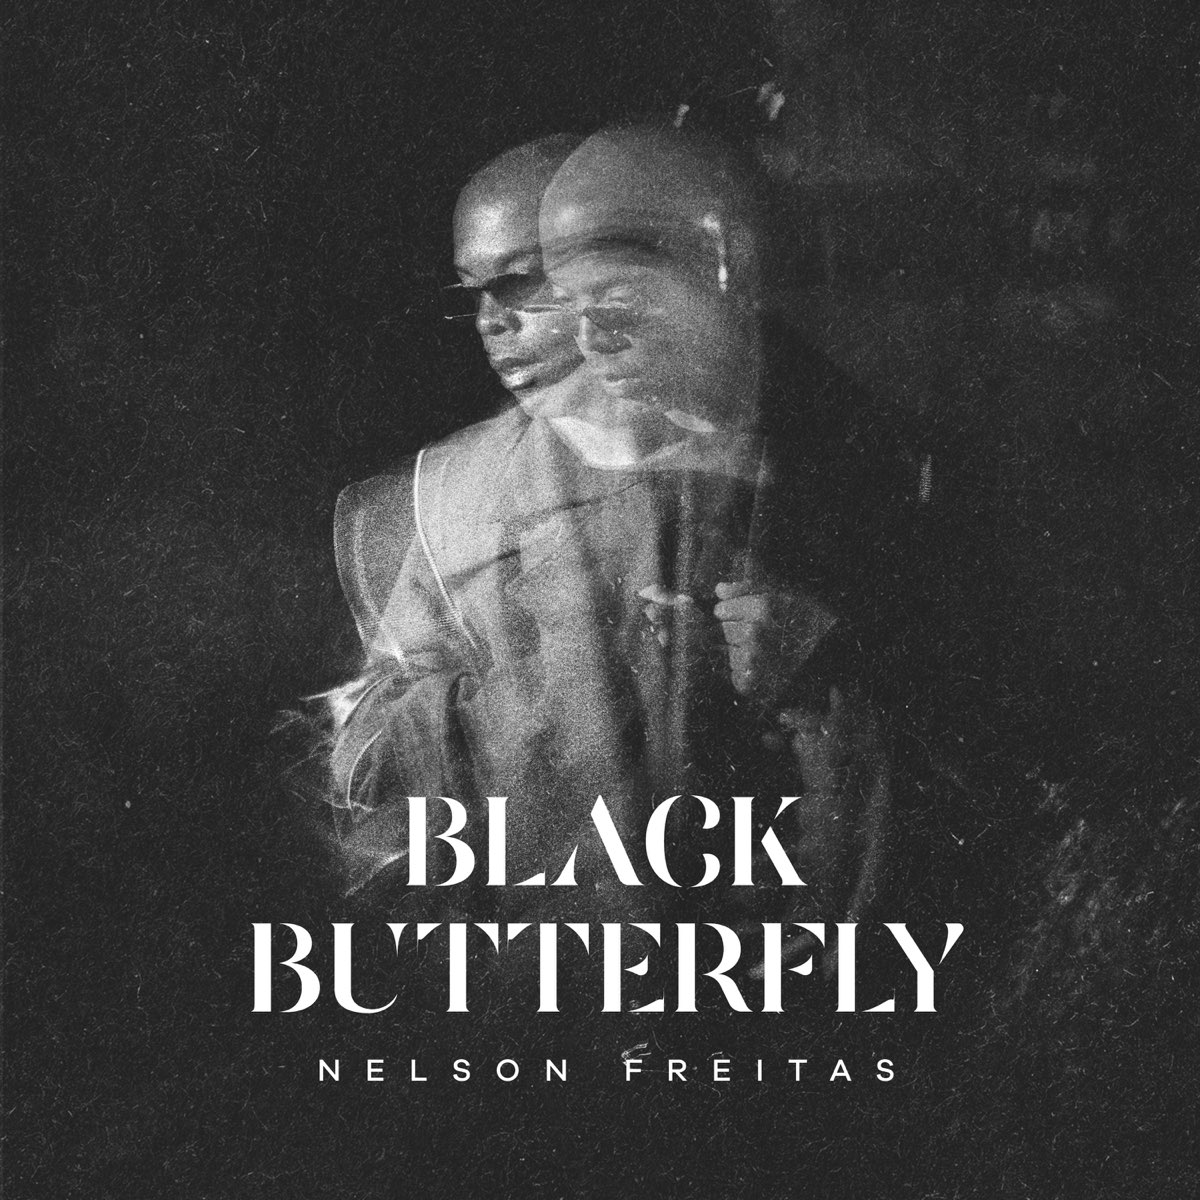 Black Butterfly by Nelson Freitas | Album